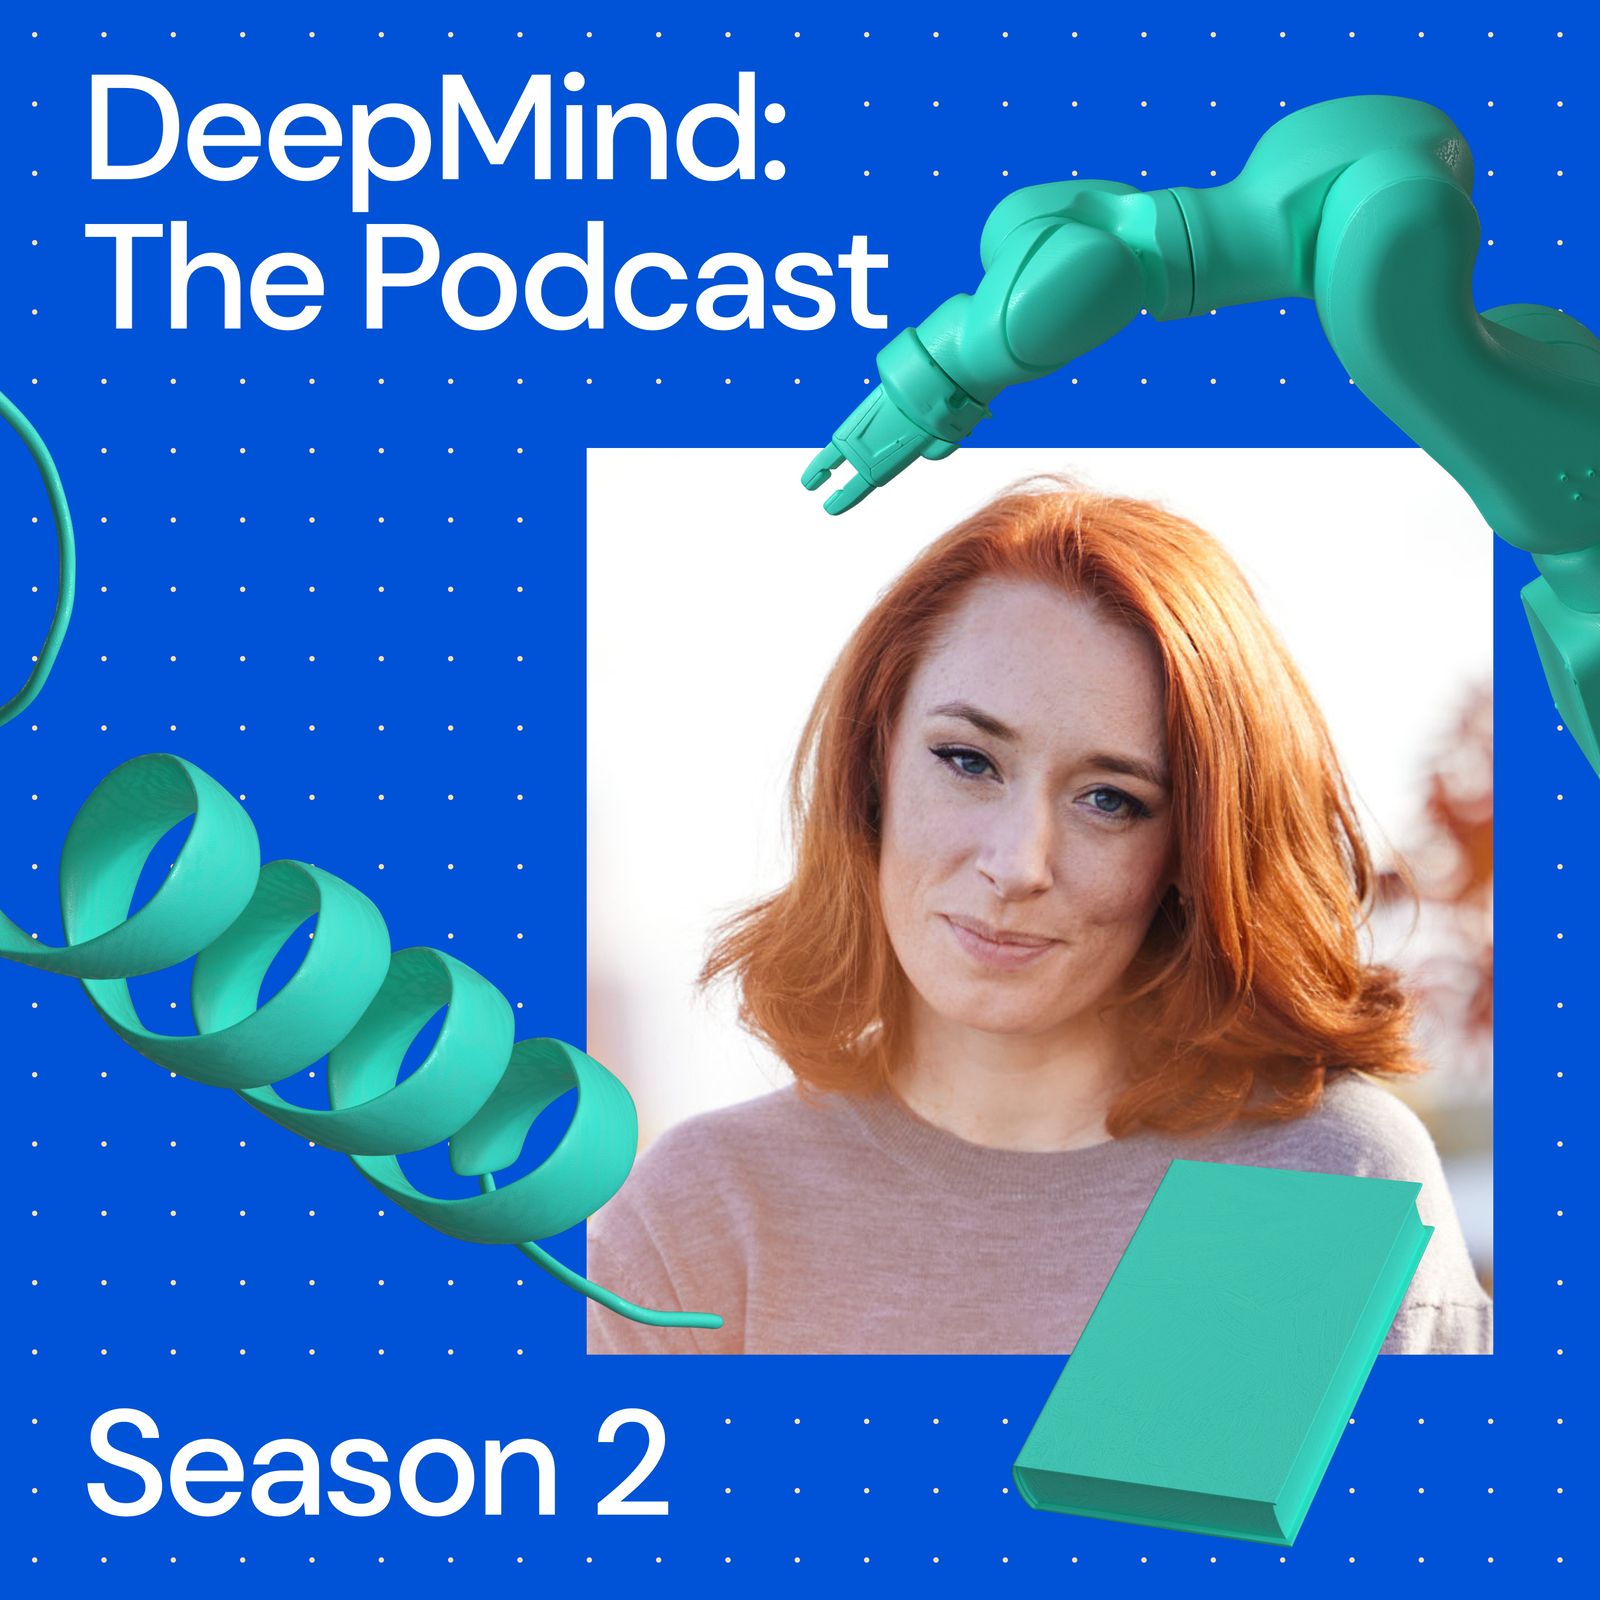 S2: DeepMind: The Podcast with Hannah Fry – Season 2 coming soon!